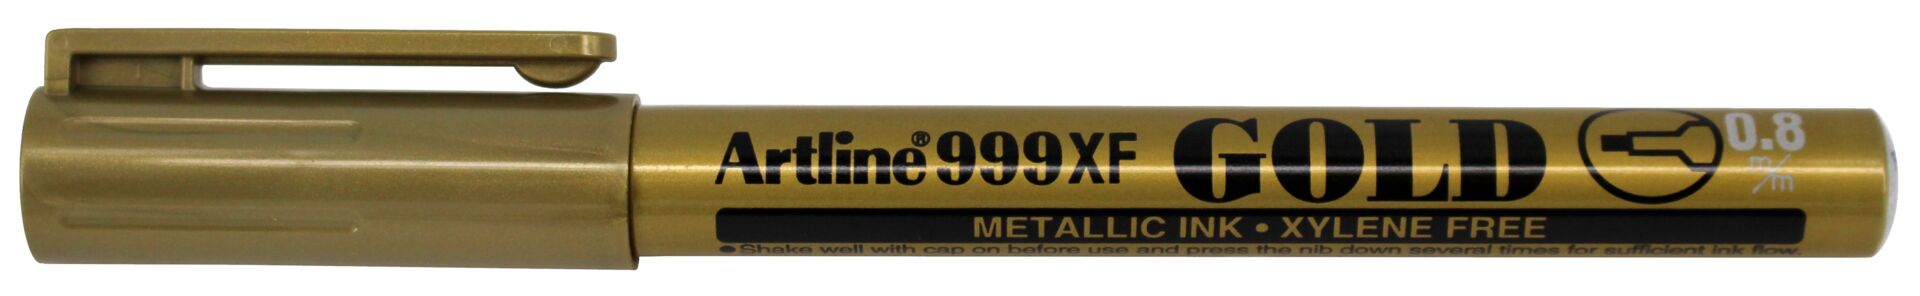 Kultakynä Artline 999 extrafine 0,8 mm